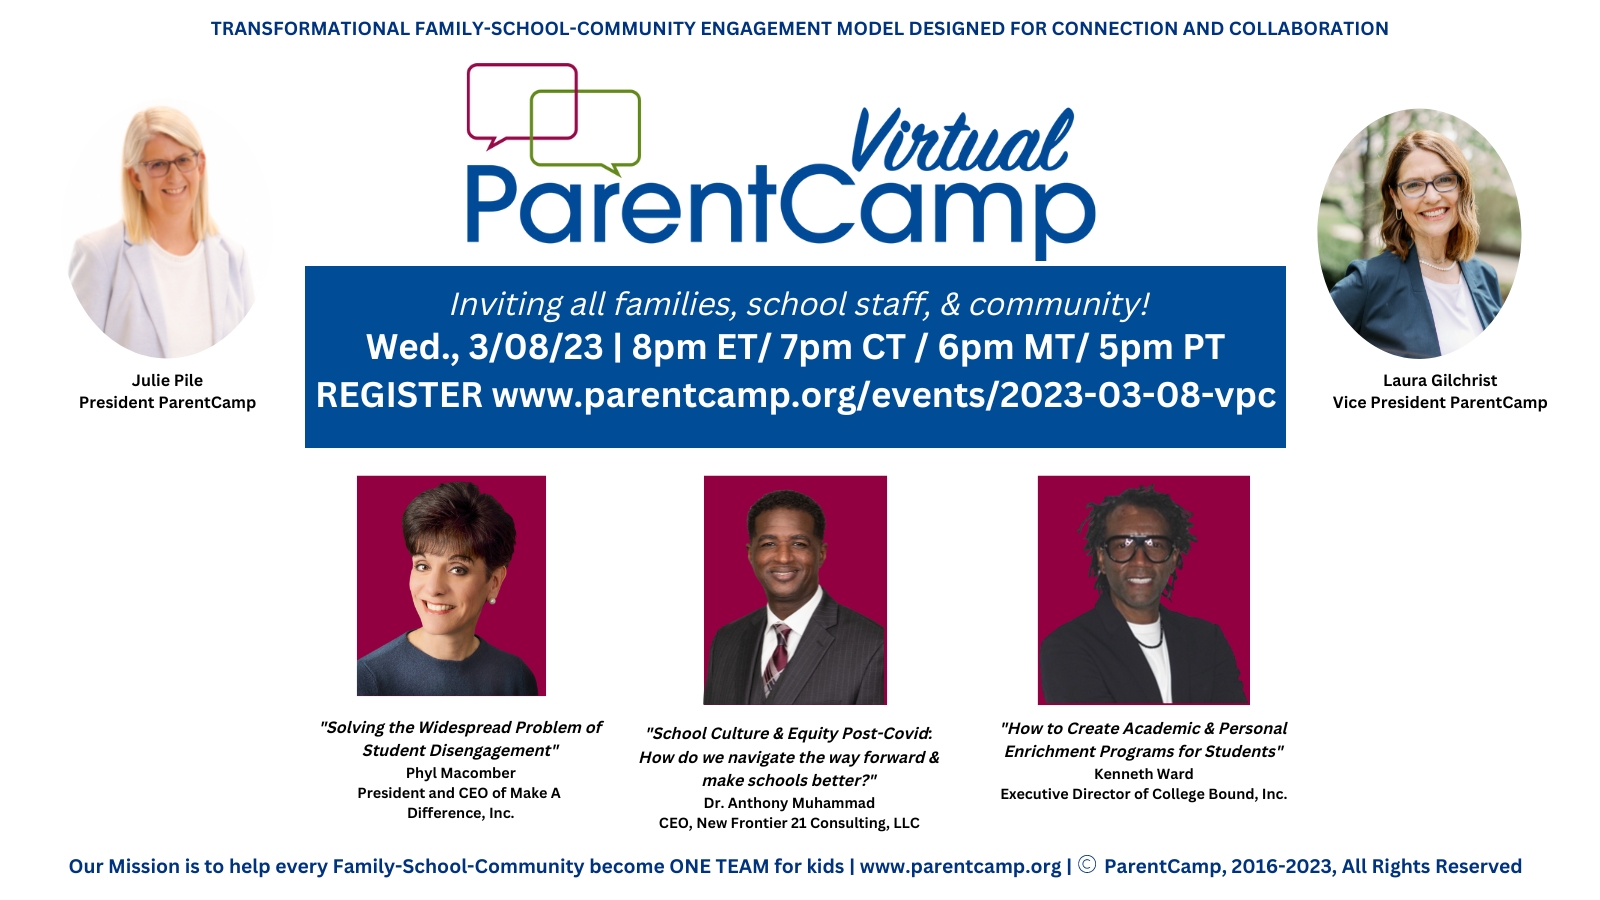 Virtual ParentCamp takes place on 3/8/23